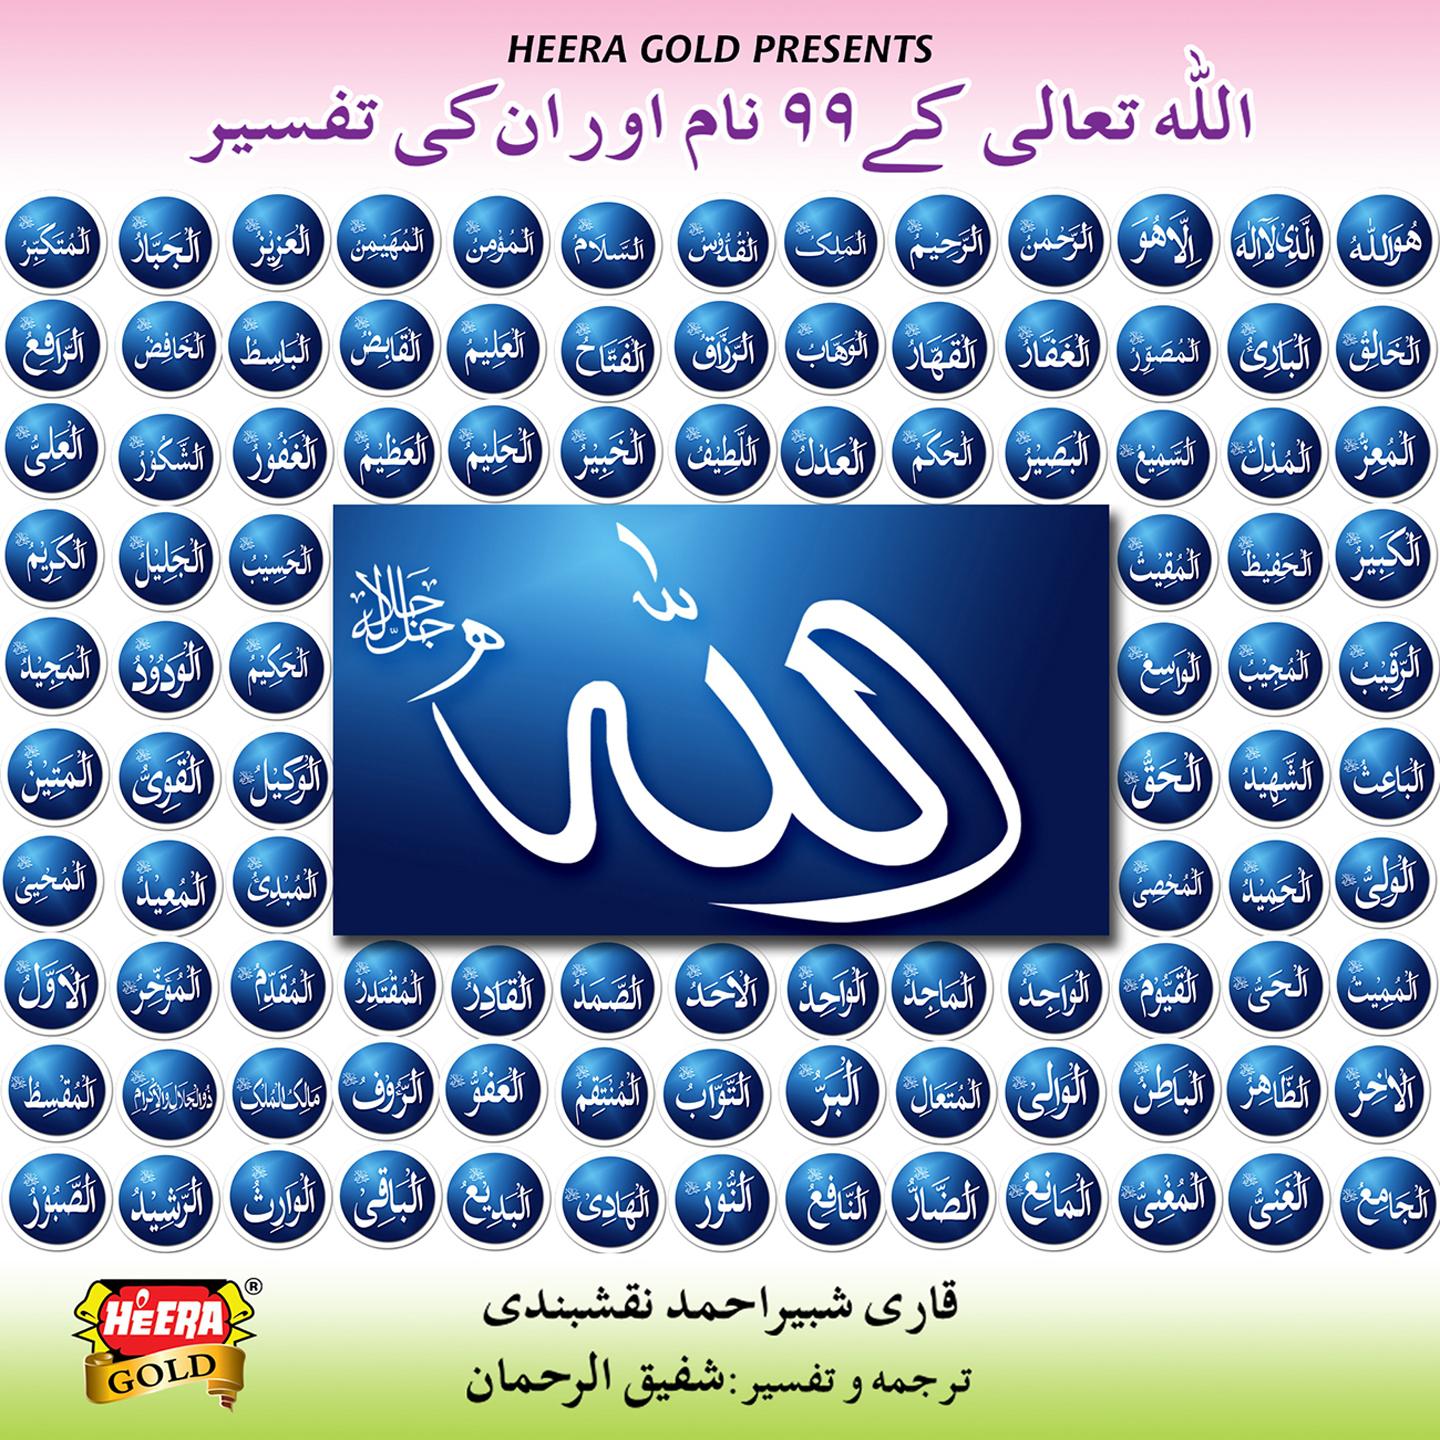 Постер альбома Asma Ul Husna